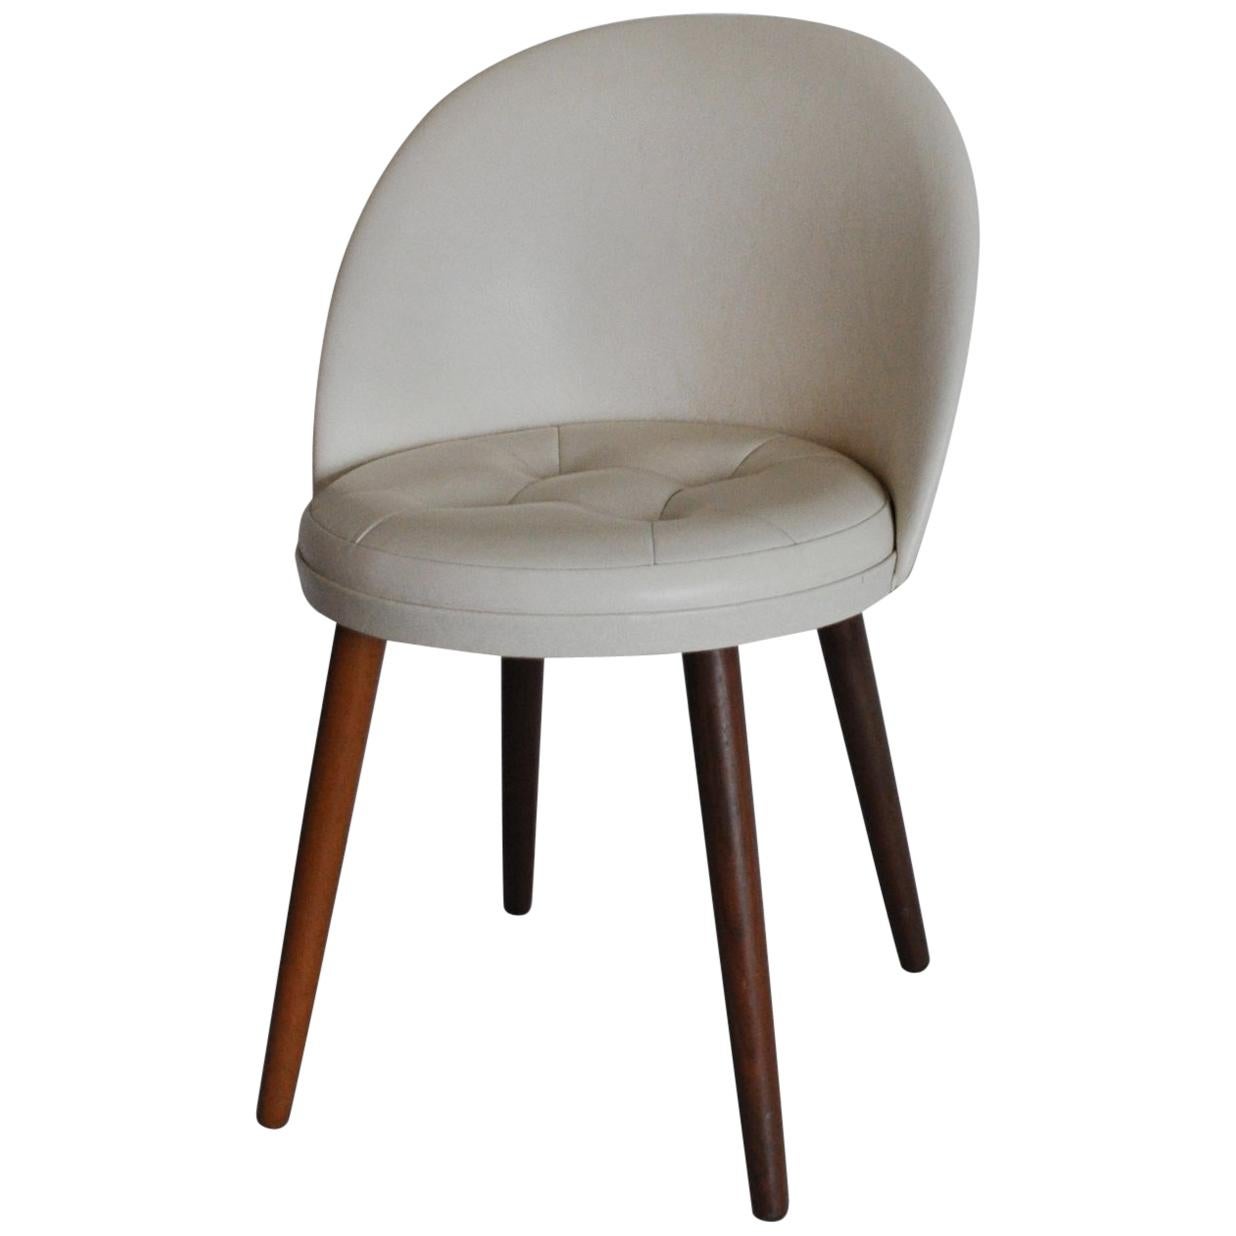 Elegant Scandinavian Modern Vanity Chair Designed in the 1950s